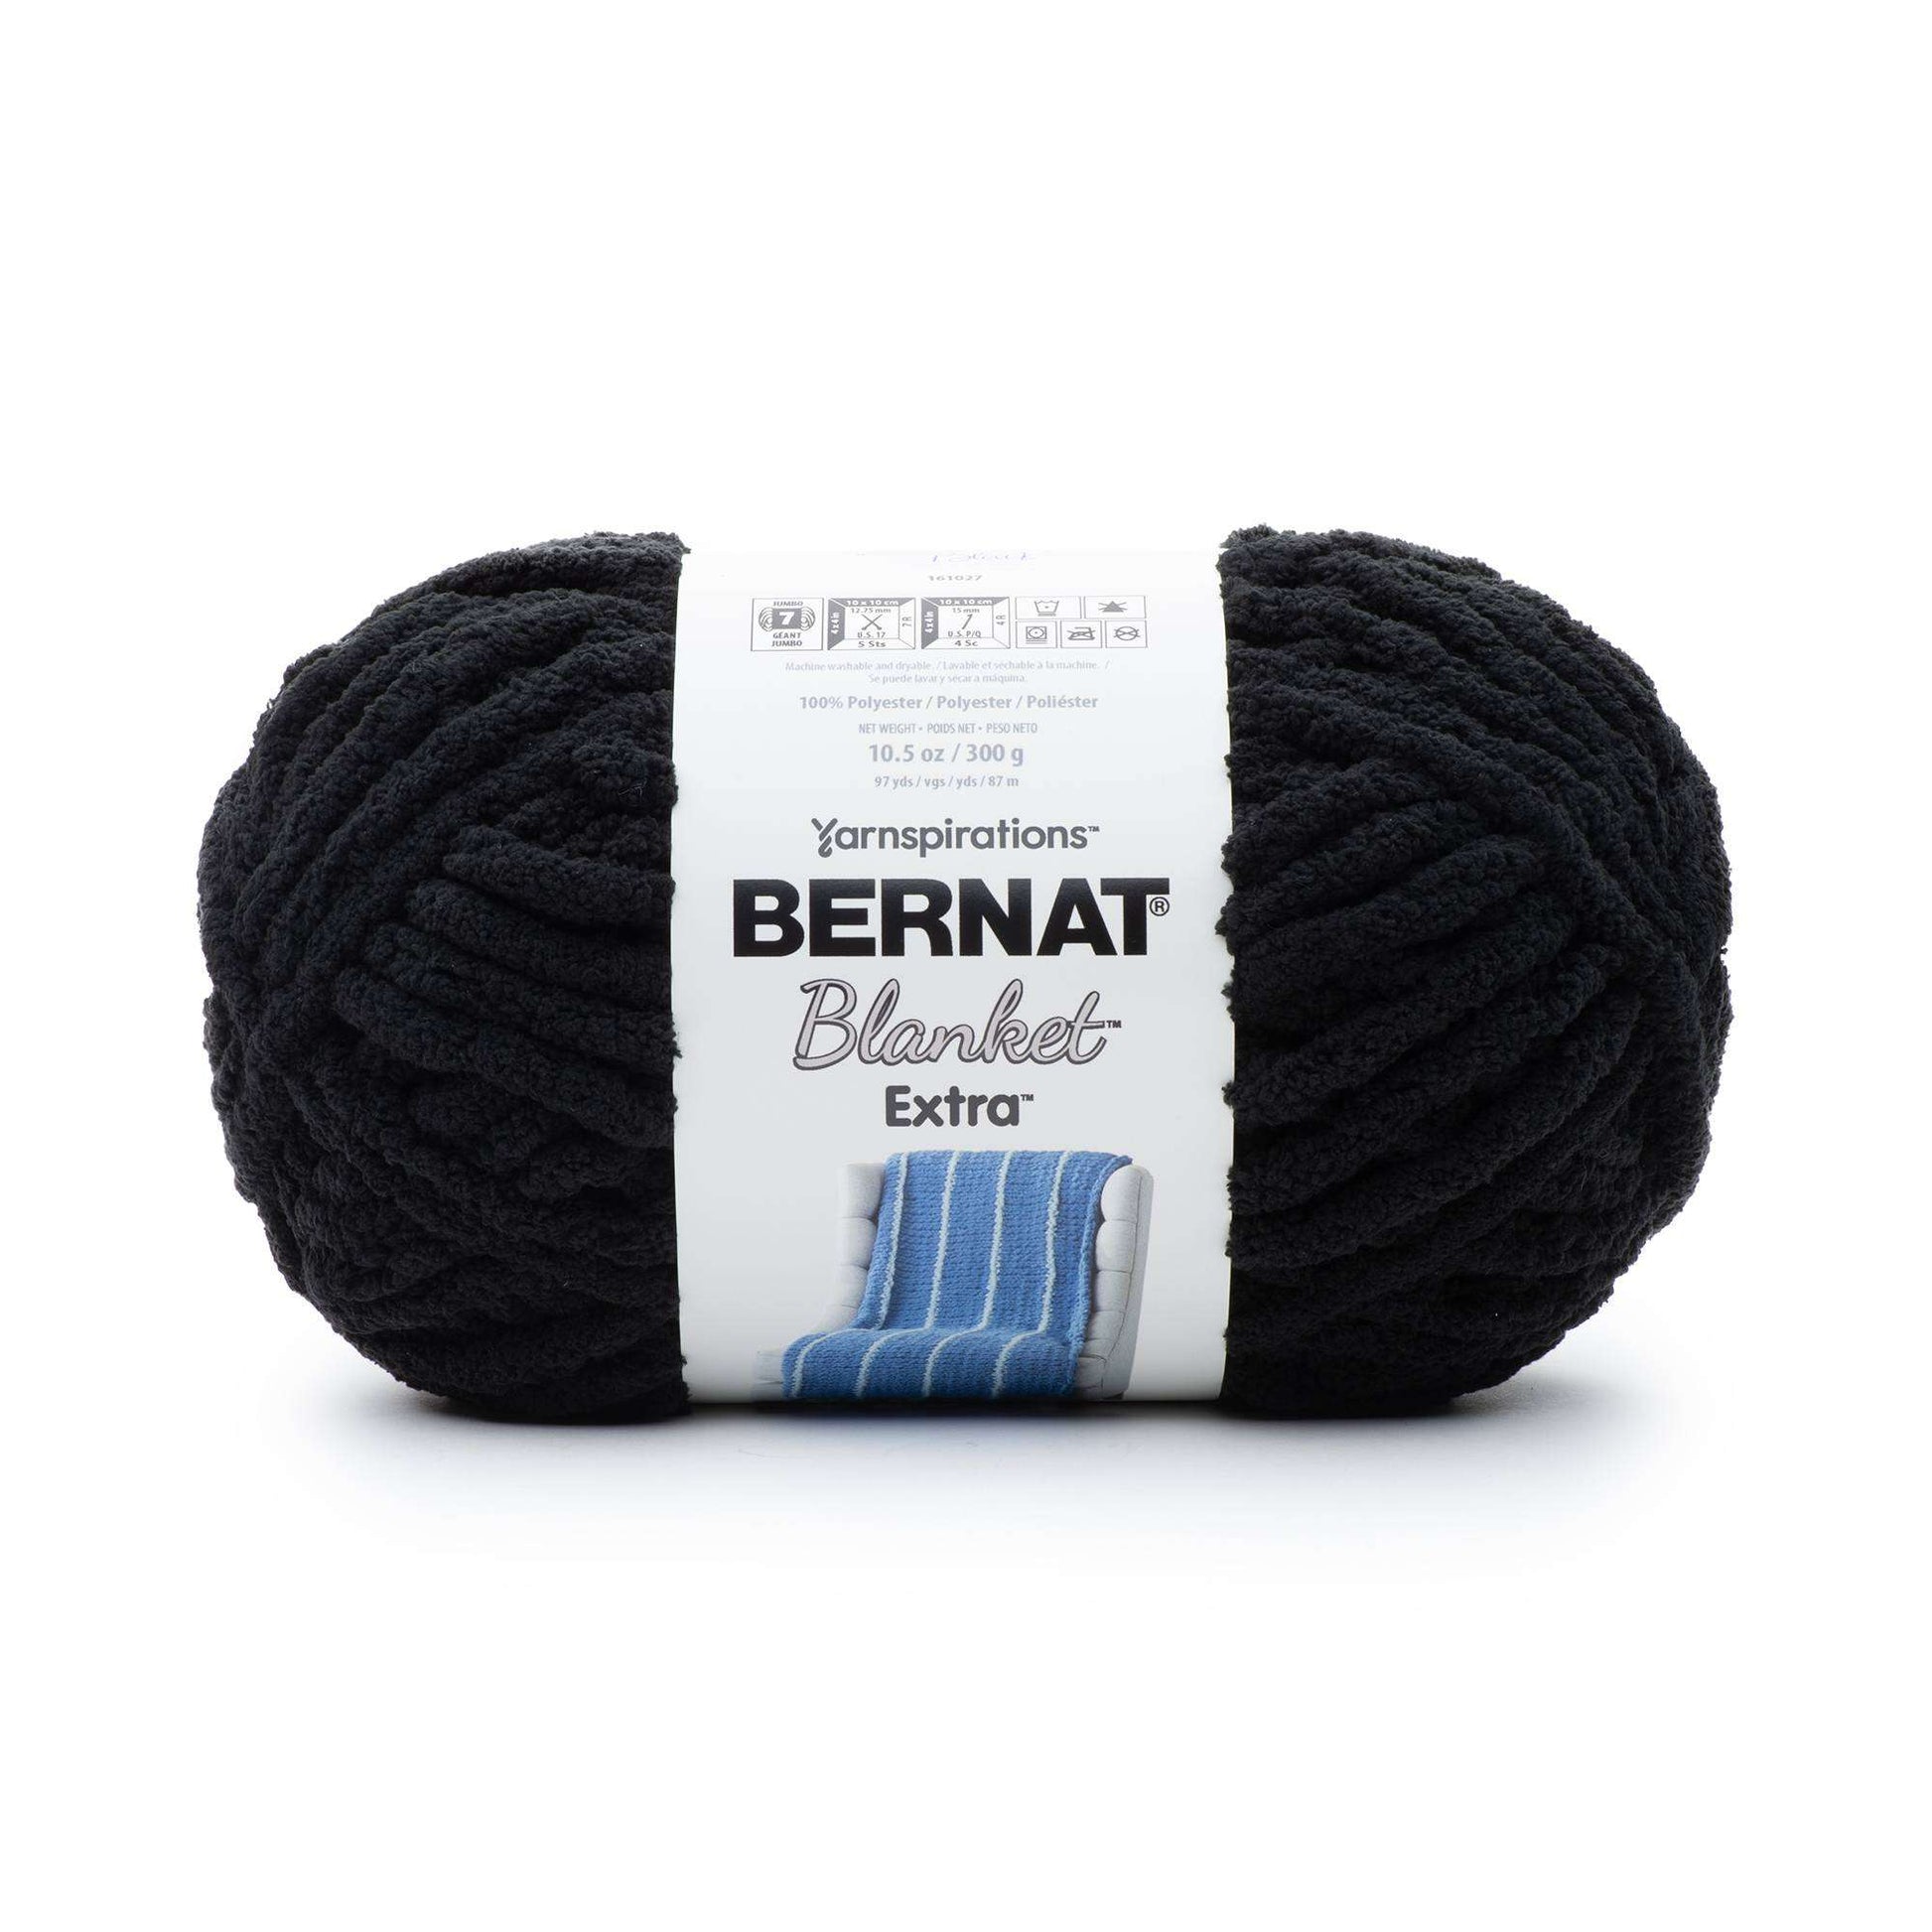 Bernat Blanket Extra Yarn (300g/10.5oz) Black